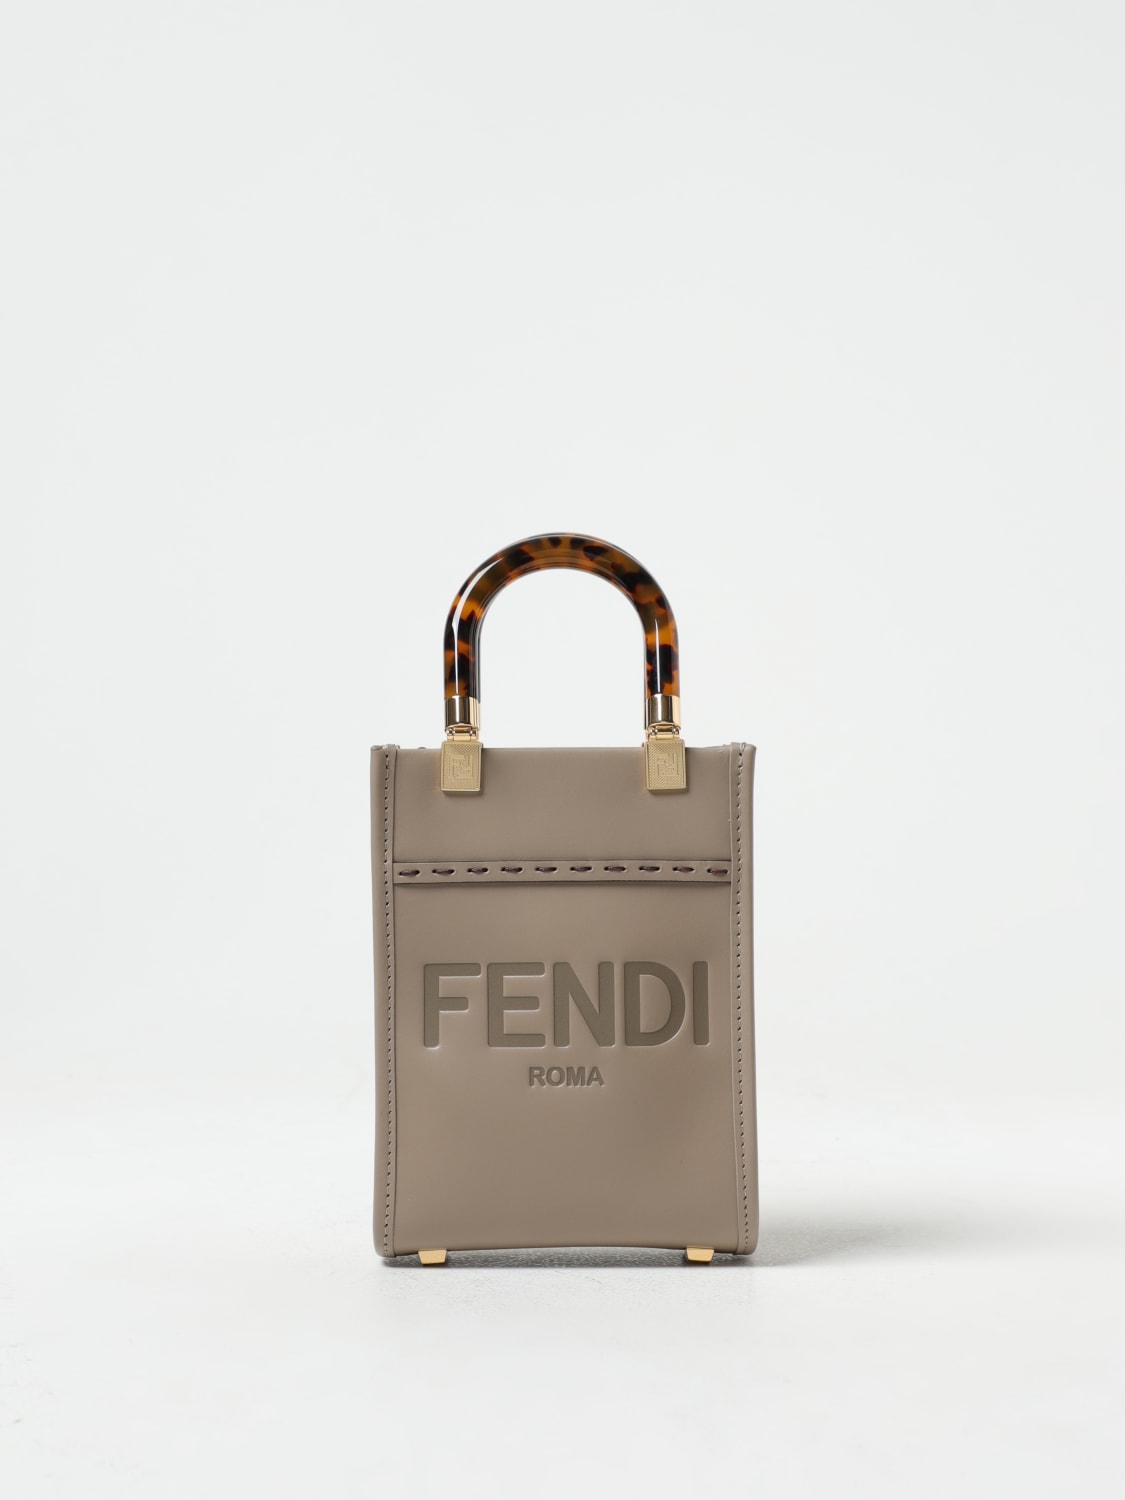 Fendi - Women's Mini Sunshine Shopper Bag Tote - Gray - Leather